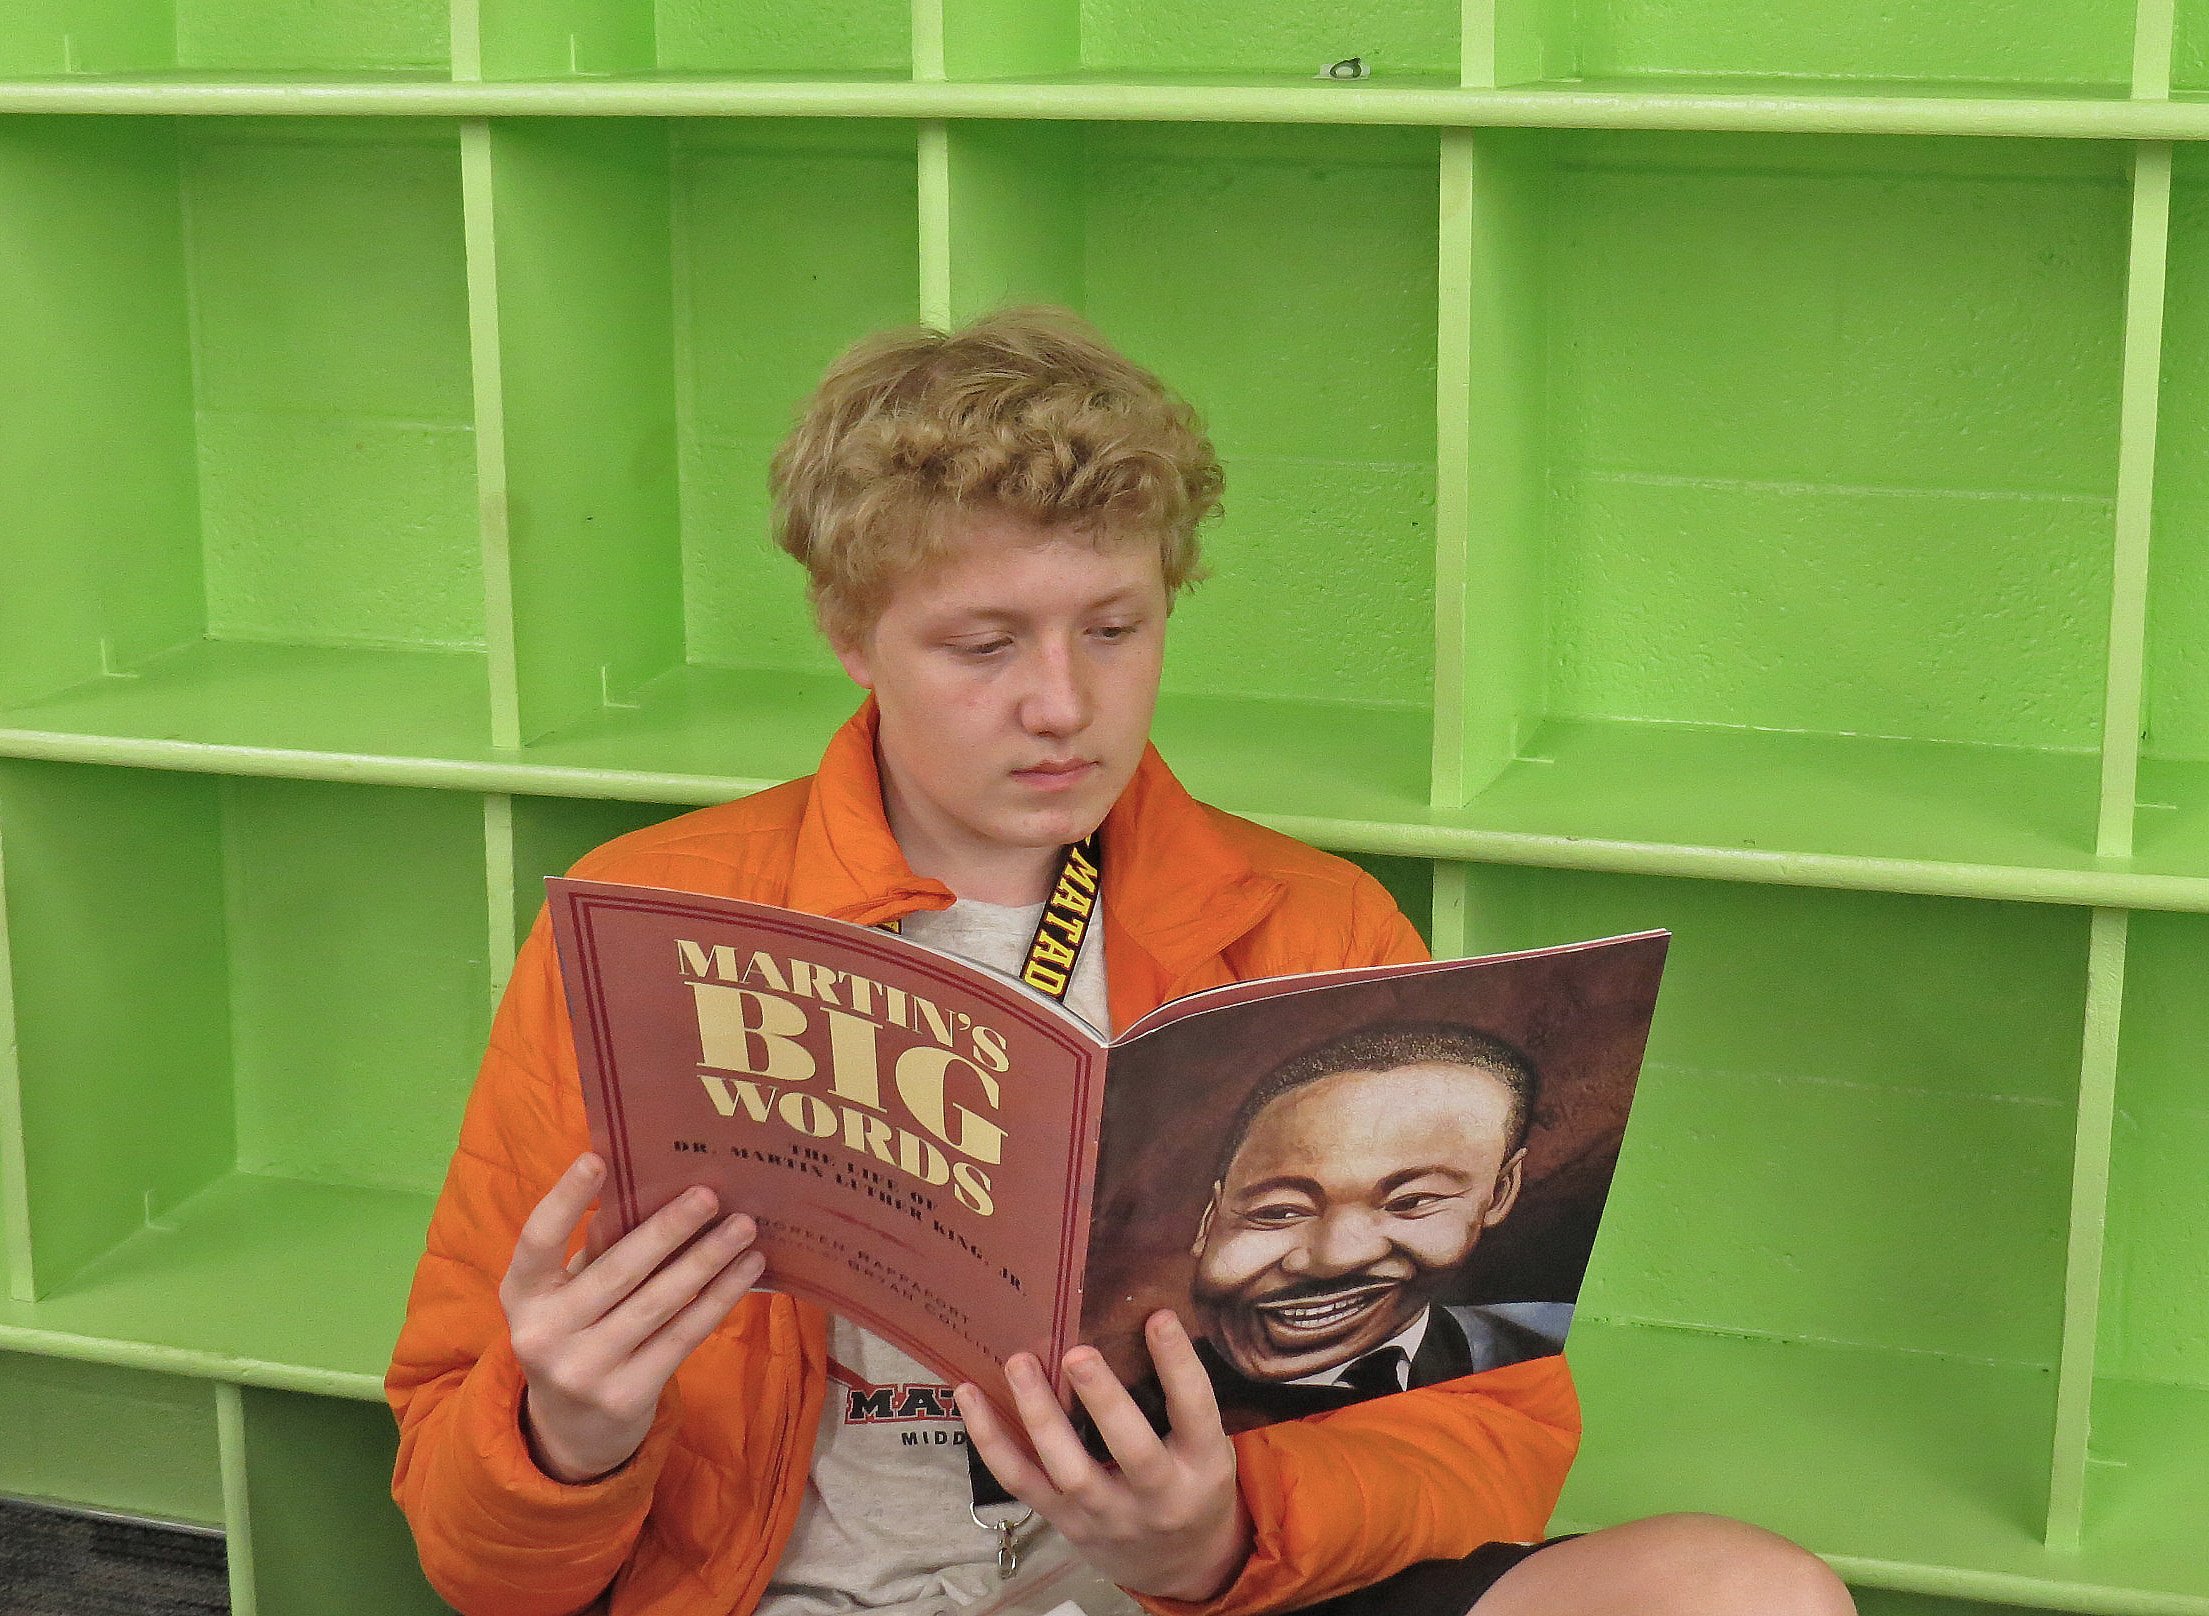 kid_reading_book_green_cubby.jpg